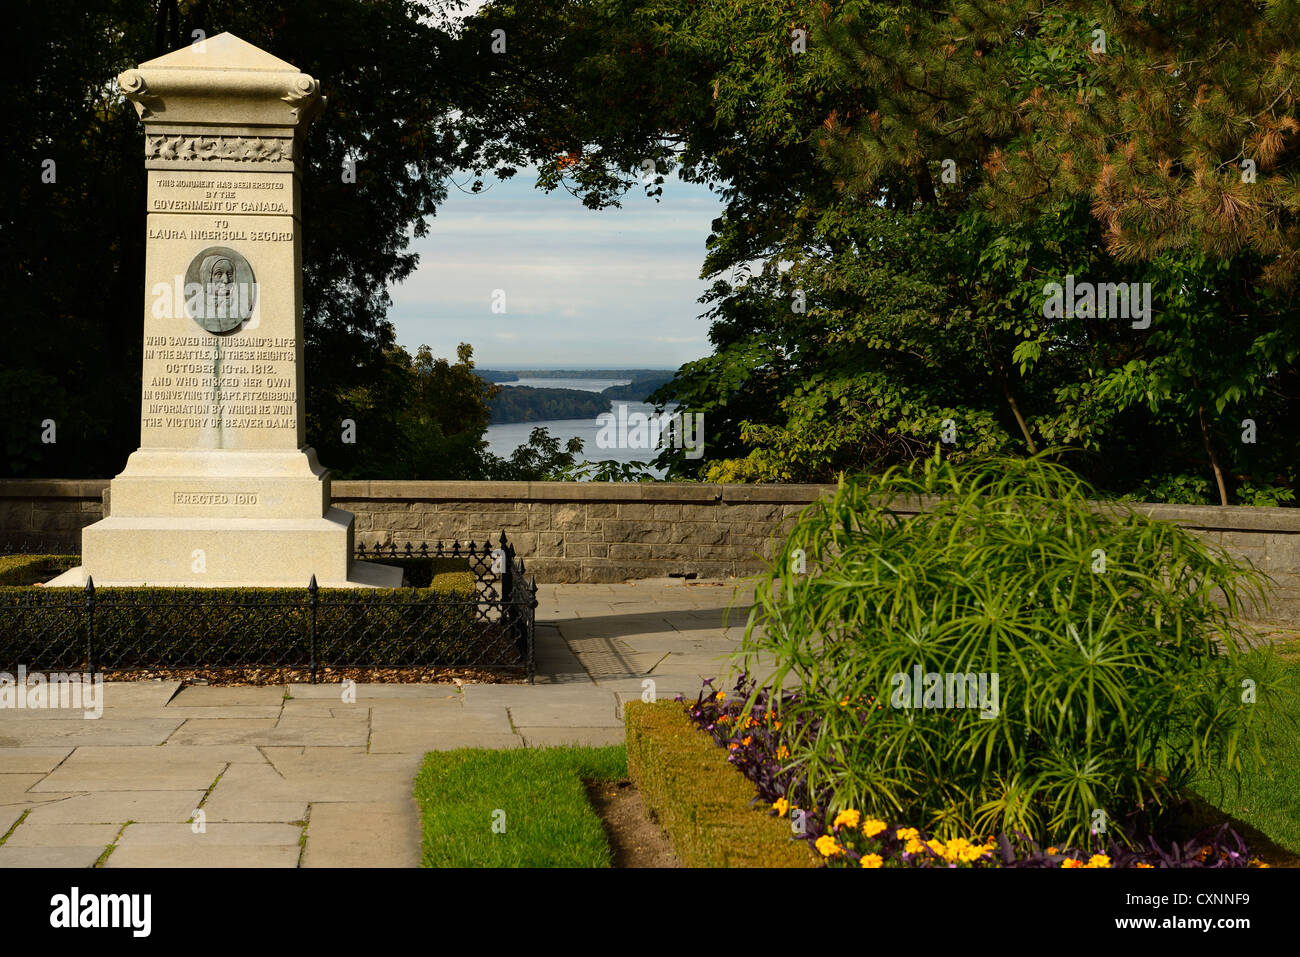 Monument à Queenston Heights Rivière Niagara ontario canada d'héroïne Laura Secord dans la guerre de 1812 avec les États-Unis Banque D'Images